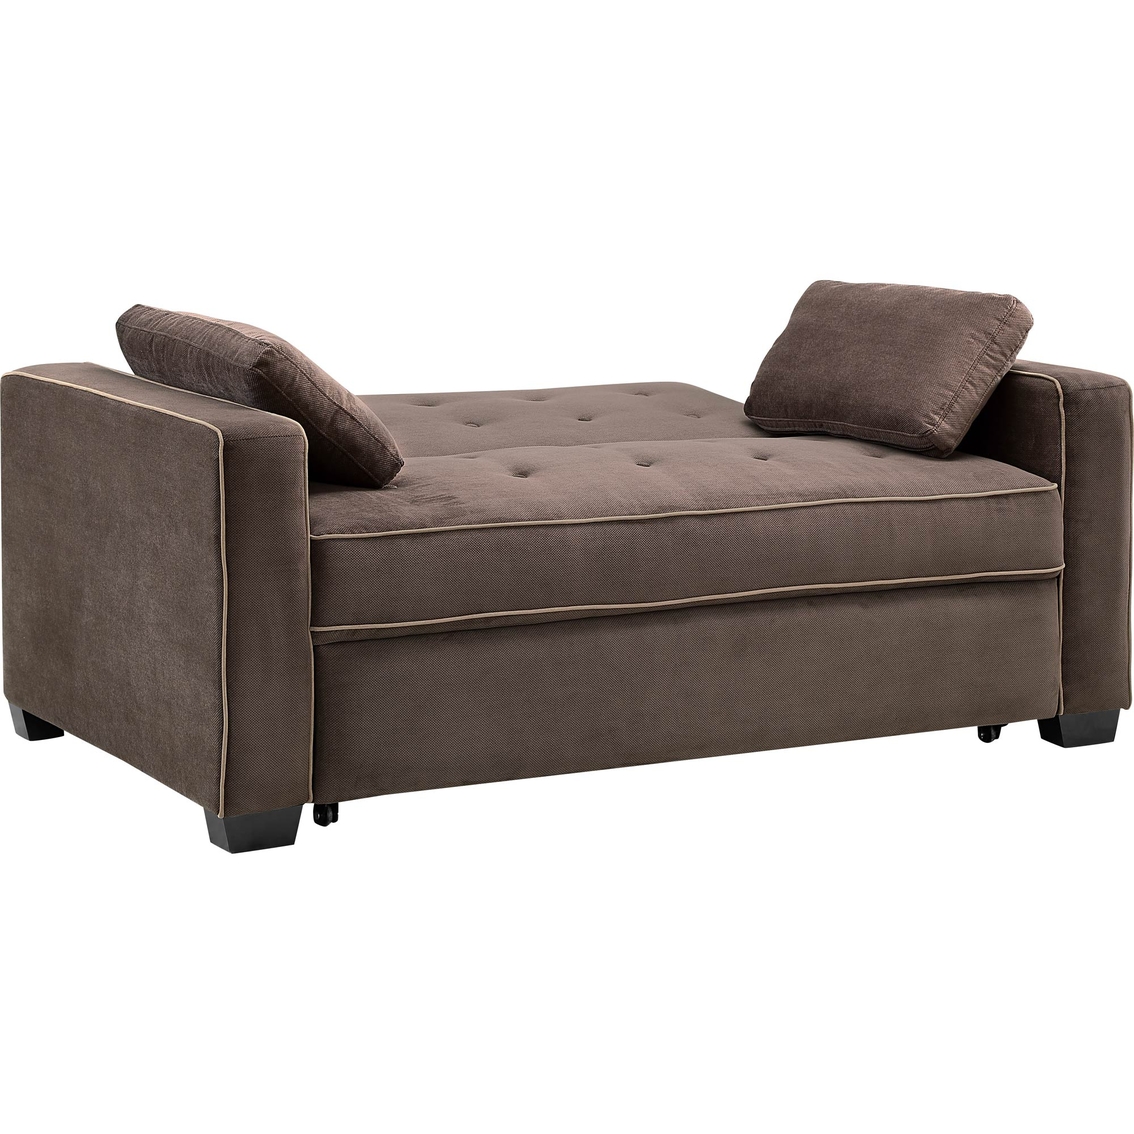 Serta Augustine Convertible Full Size Sleeper Sofa Sofas Couches Furniture Appliances The Exchange